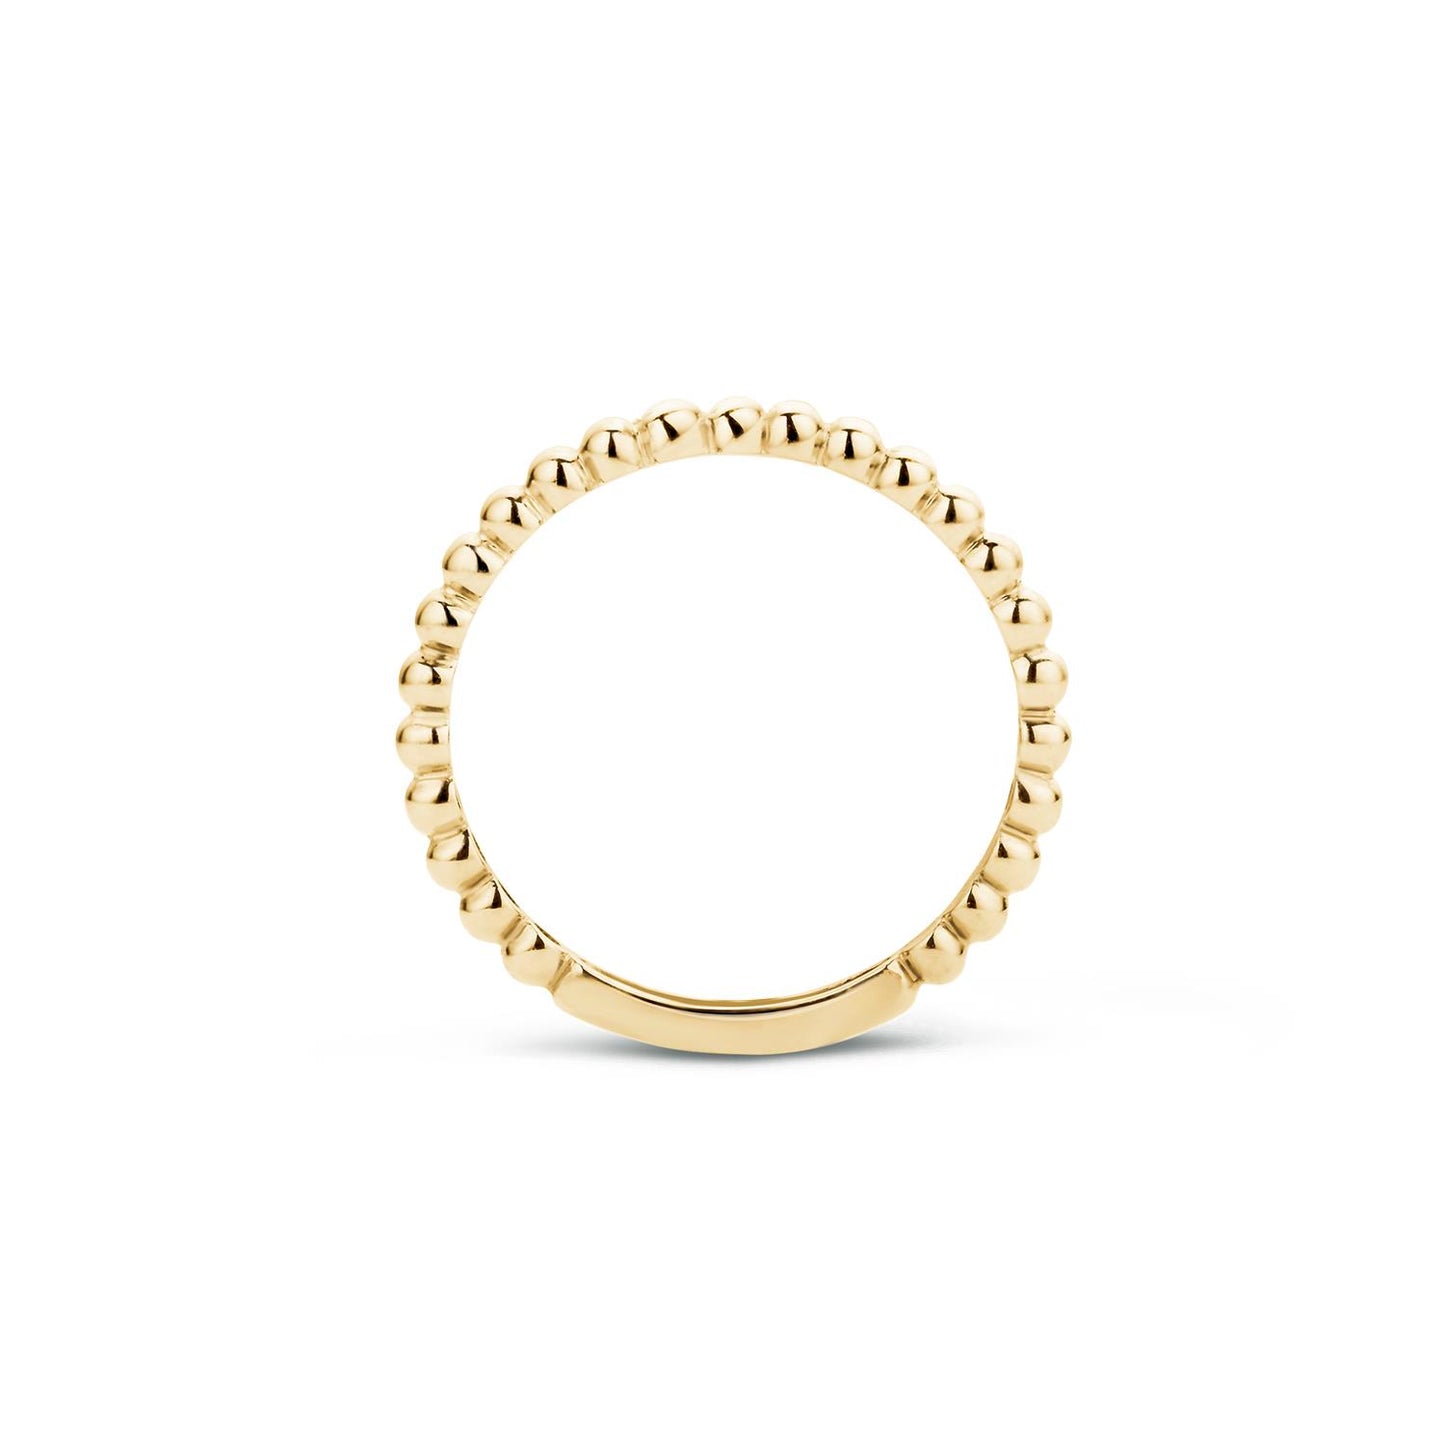 Blush Ring 1105YGO\/54 585 Gold